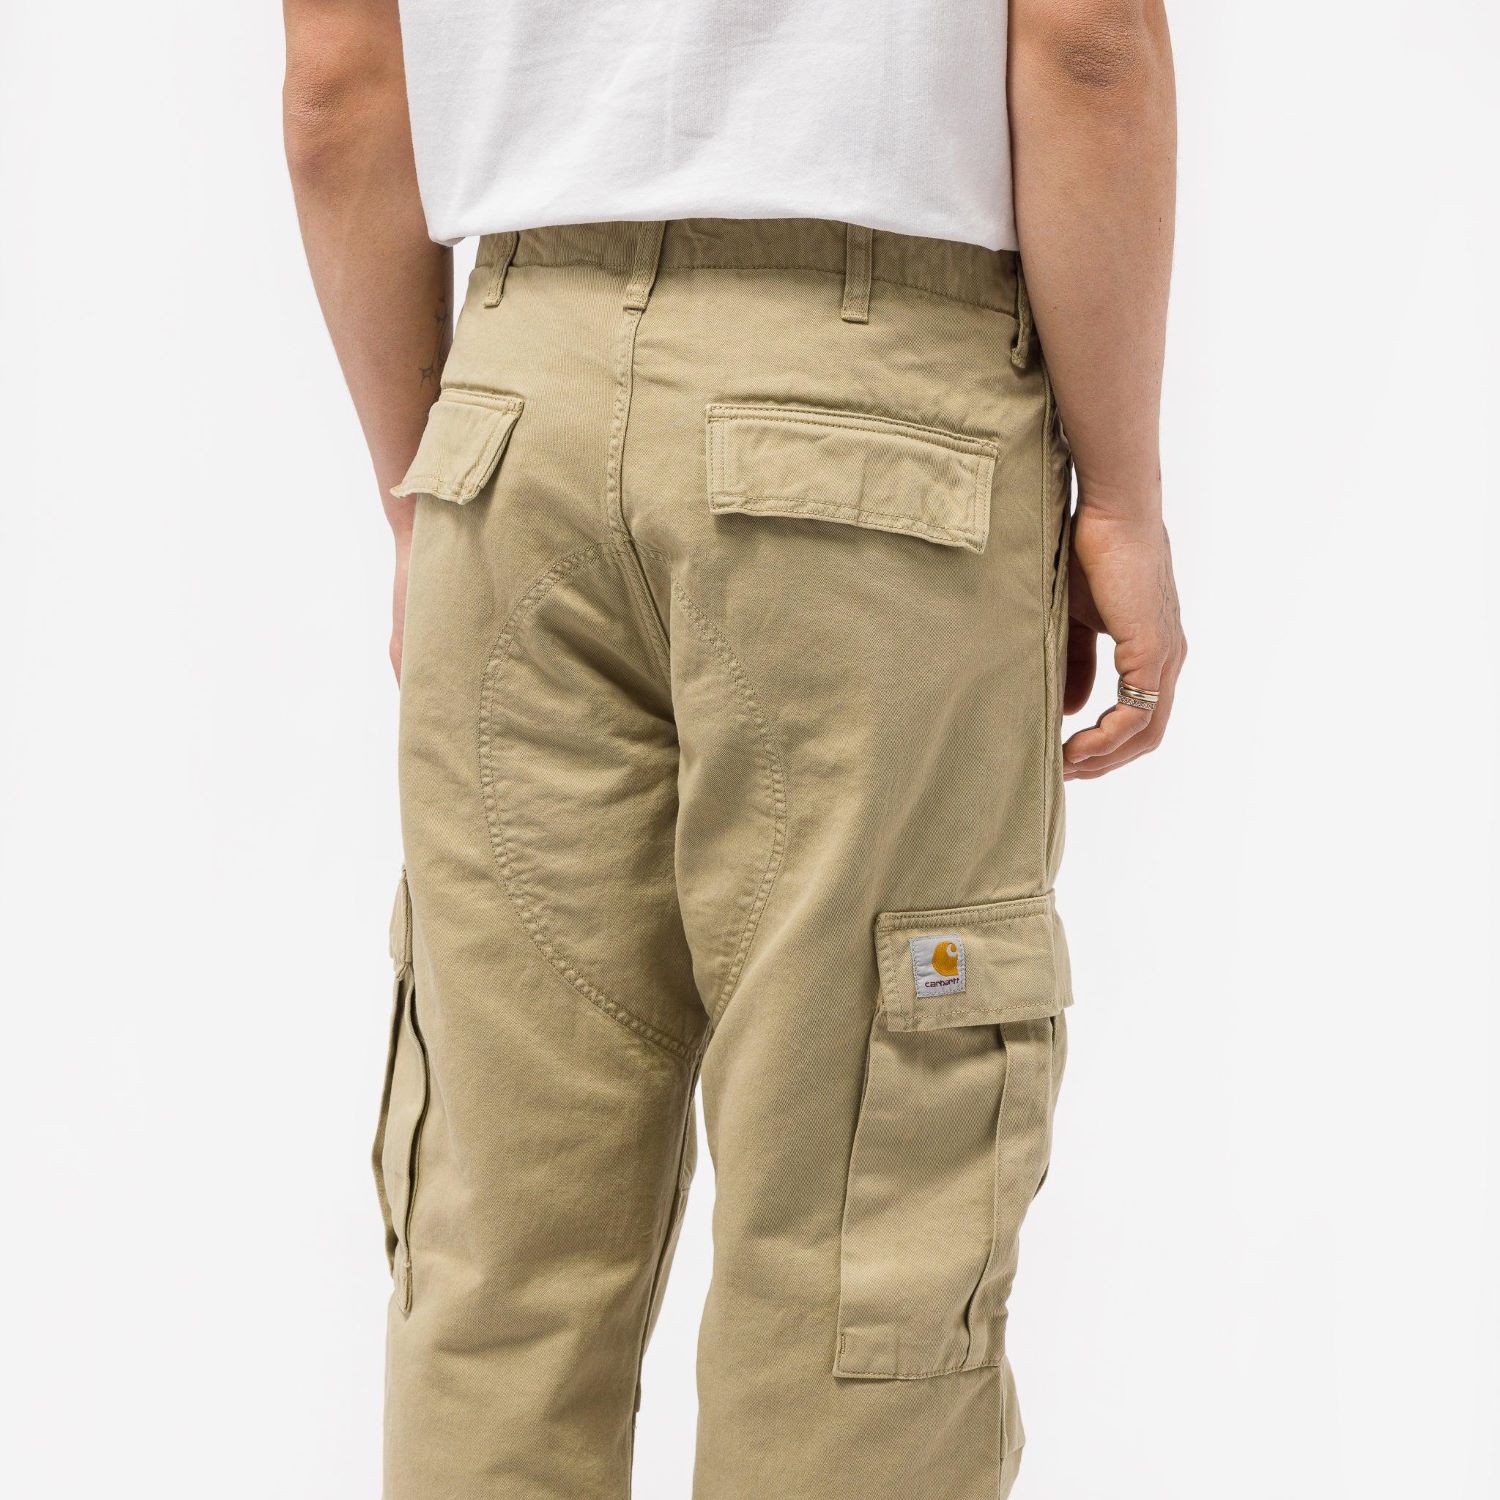 Carhartt WIP JET PANT - Cargo trousers - wall rinsed/khaki - Zalando.de